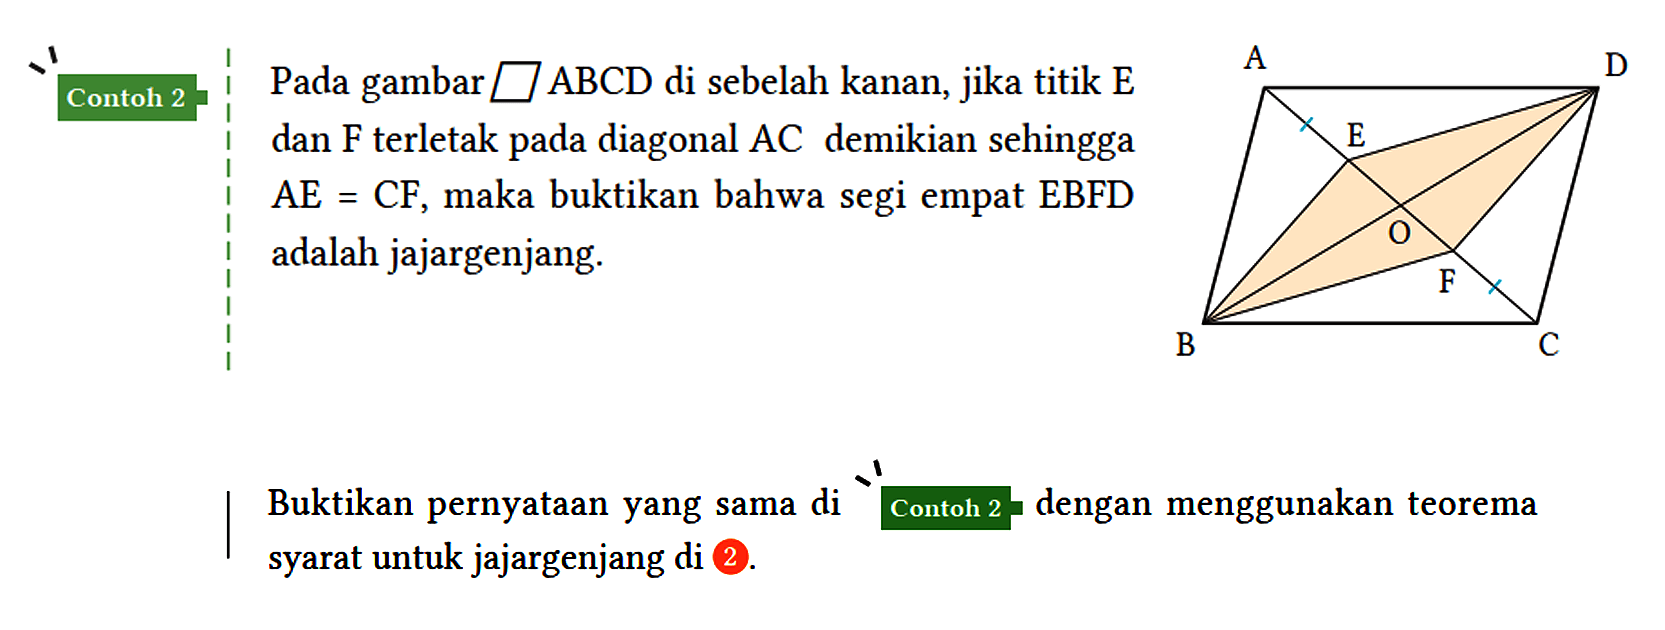 Contoh 2
Pada gambar jajargenjang ABCD di sebelah kanan, jika titik E dan F terletak pada diagonal AC demikian sehingga AE = CF, maka buktikan bahwa segi empat EBFD adalah jajargenjang.
A D B C E O F
Buktikan pernyataan yang sama di Contoh 2 dengan menggunakan teorema syarat untuk jajargenjang di 2.